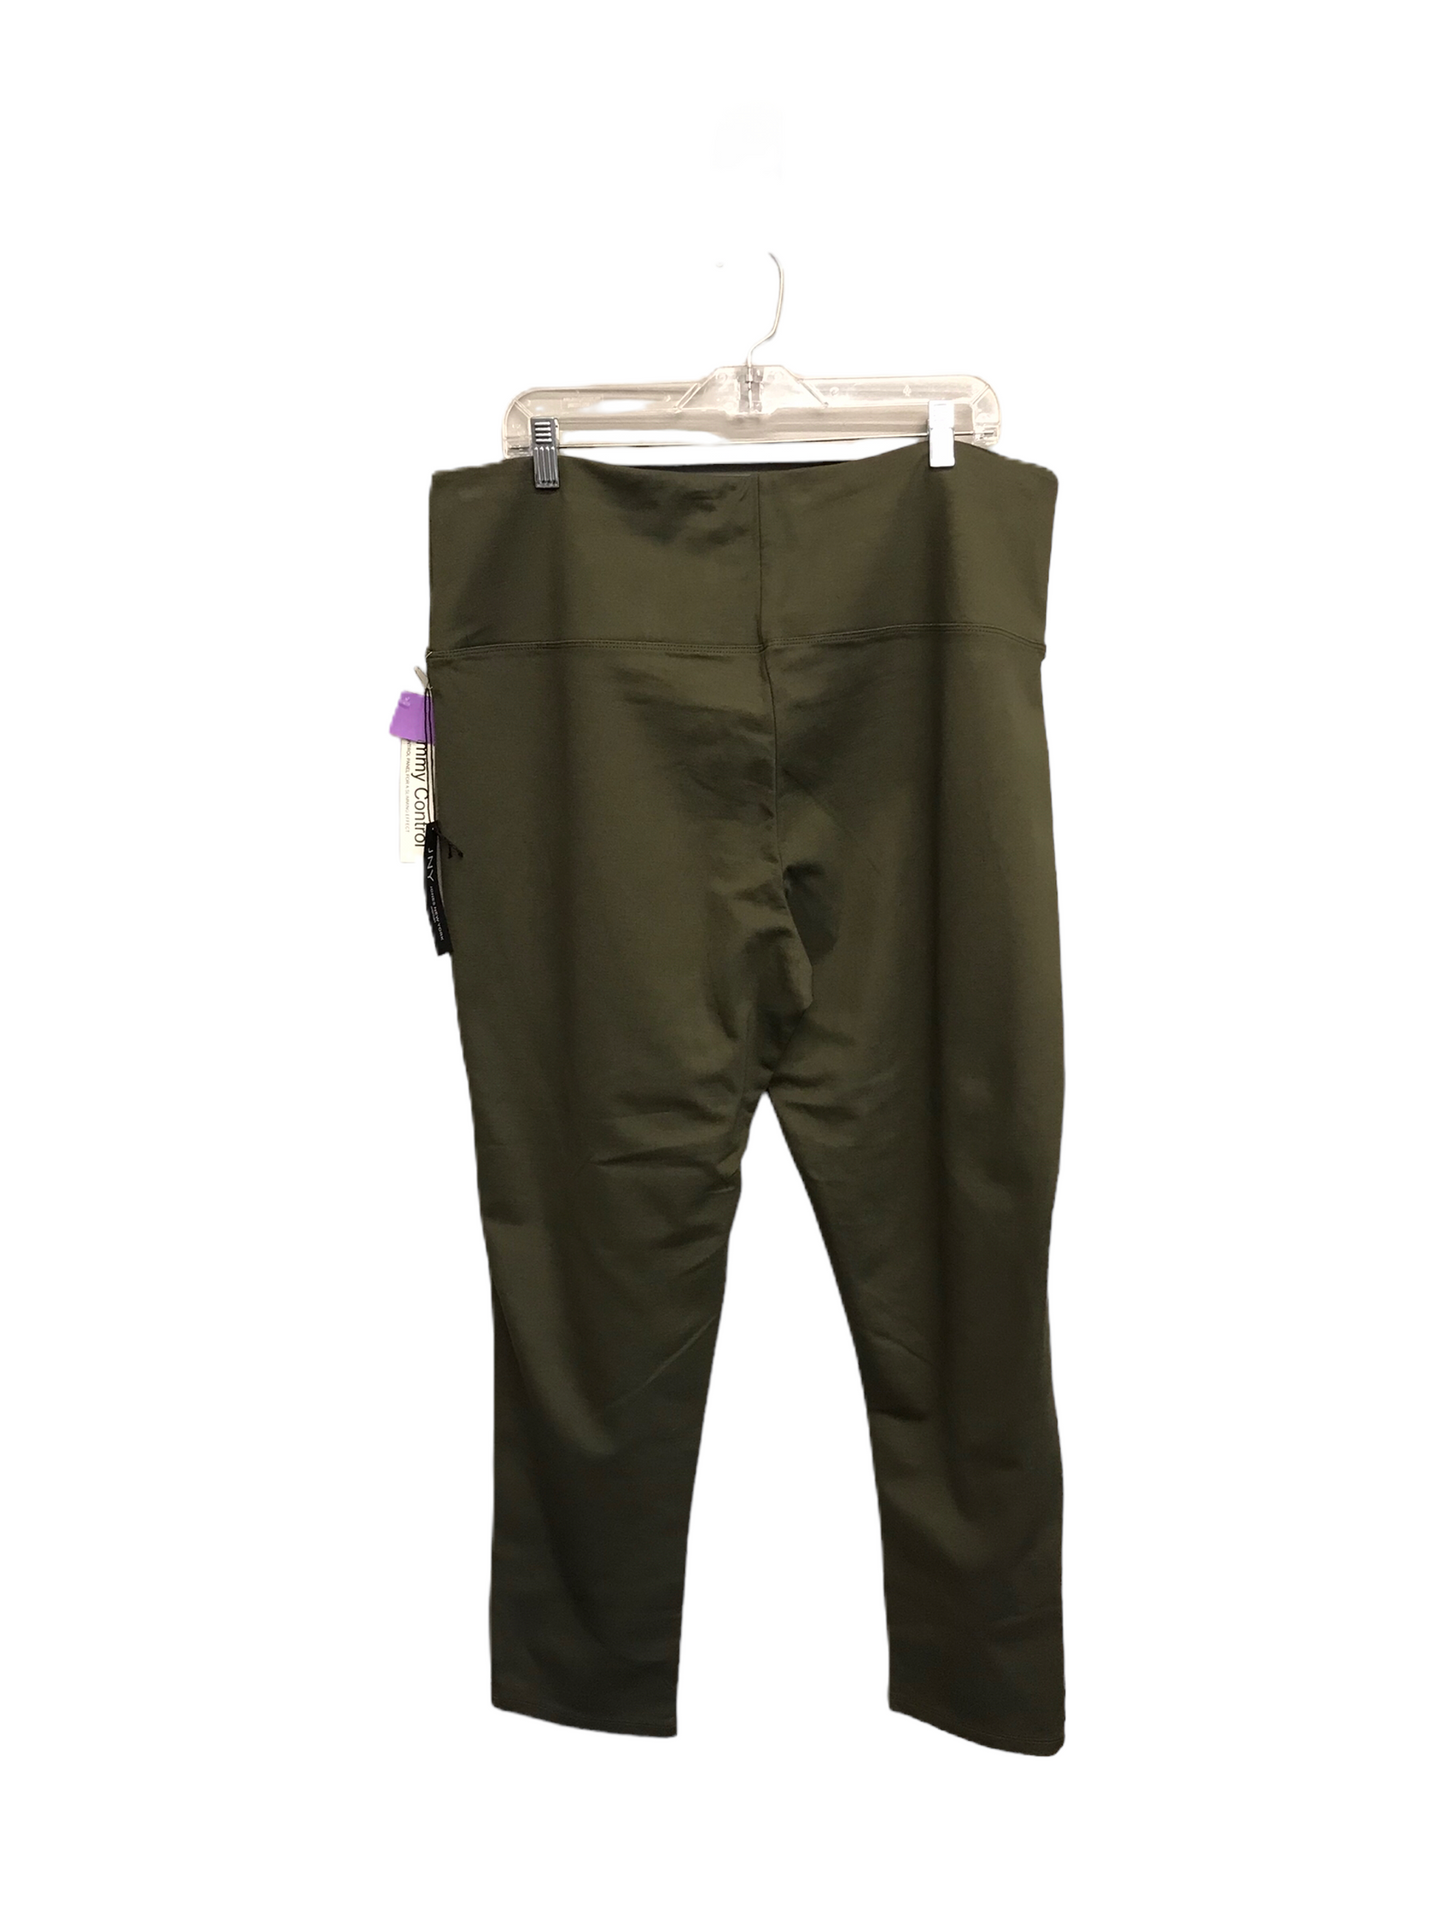 Green Pants Leggings By Jones New York, Size: 20